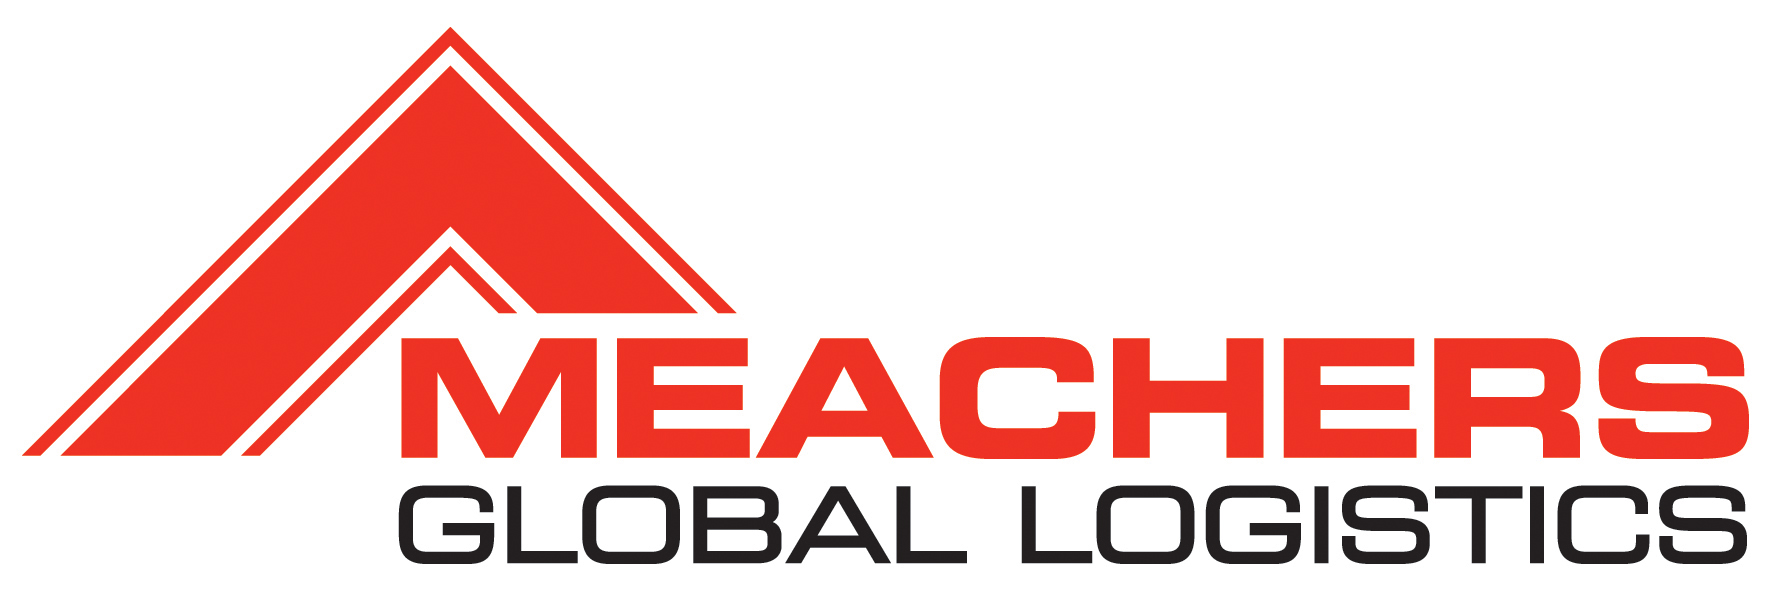 Meachers logo